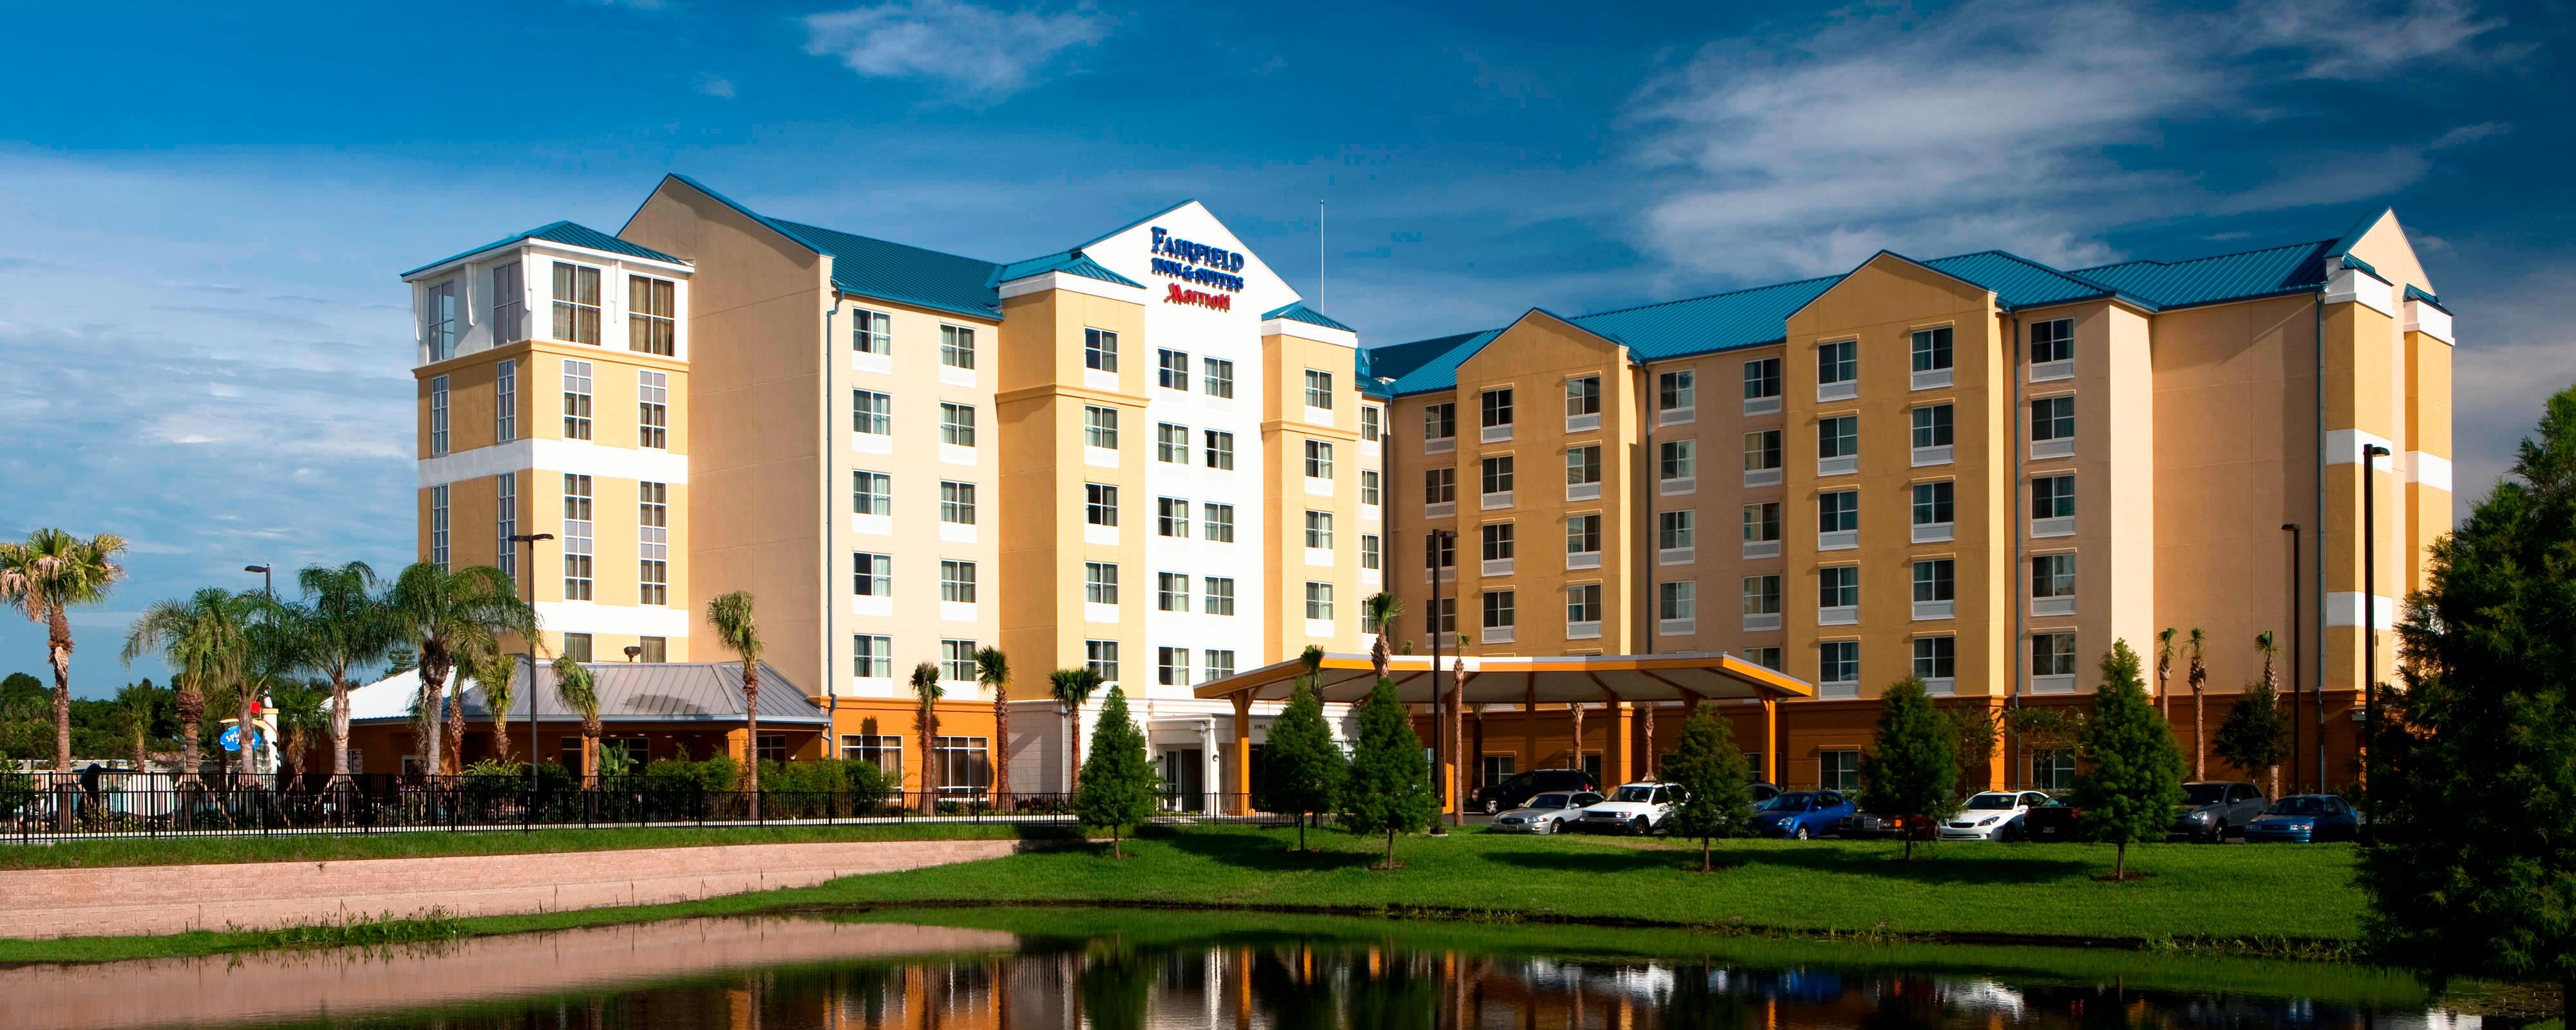 Orlando, FL Hotel Packages | Fairfield Inn & Suites Orlando at SeaWorld®